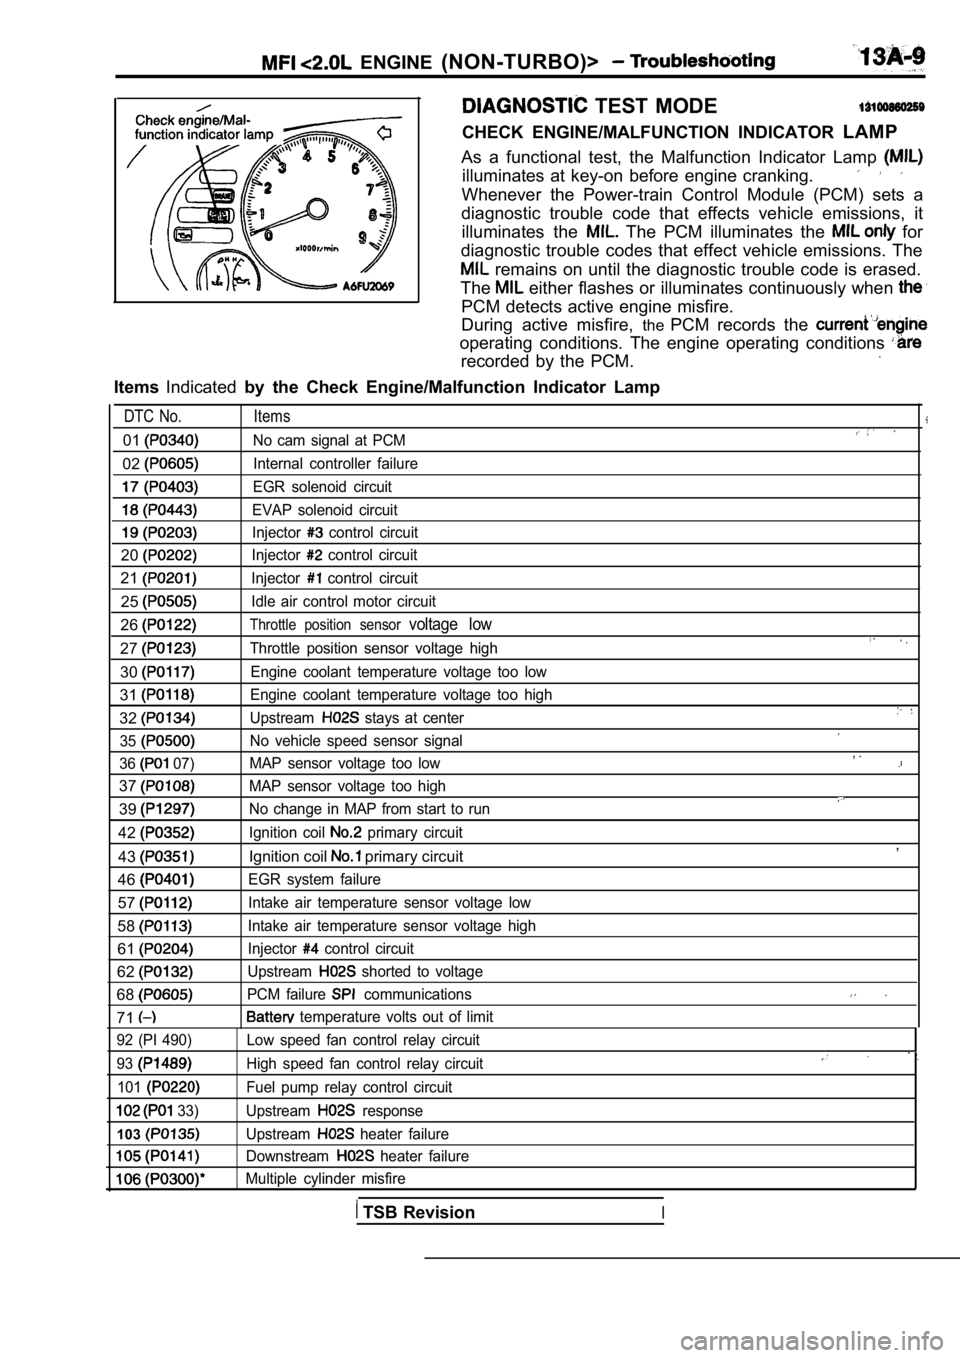 MITSUBISHI SPYDER 1990  Service Repair Manual   ENGINE (NON-TURBO)>
  TEST  MODE
CHECK  ENGINE/MALFUNCTION  INDICATOR  LAMP
As  a  functional  test,  the  Malfunction  Indicator  Lam p 
illuminates  at  key-on  before  engine  cranking.
Whenever 